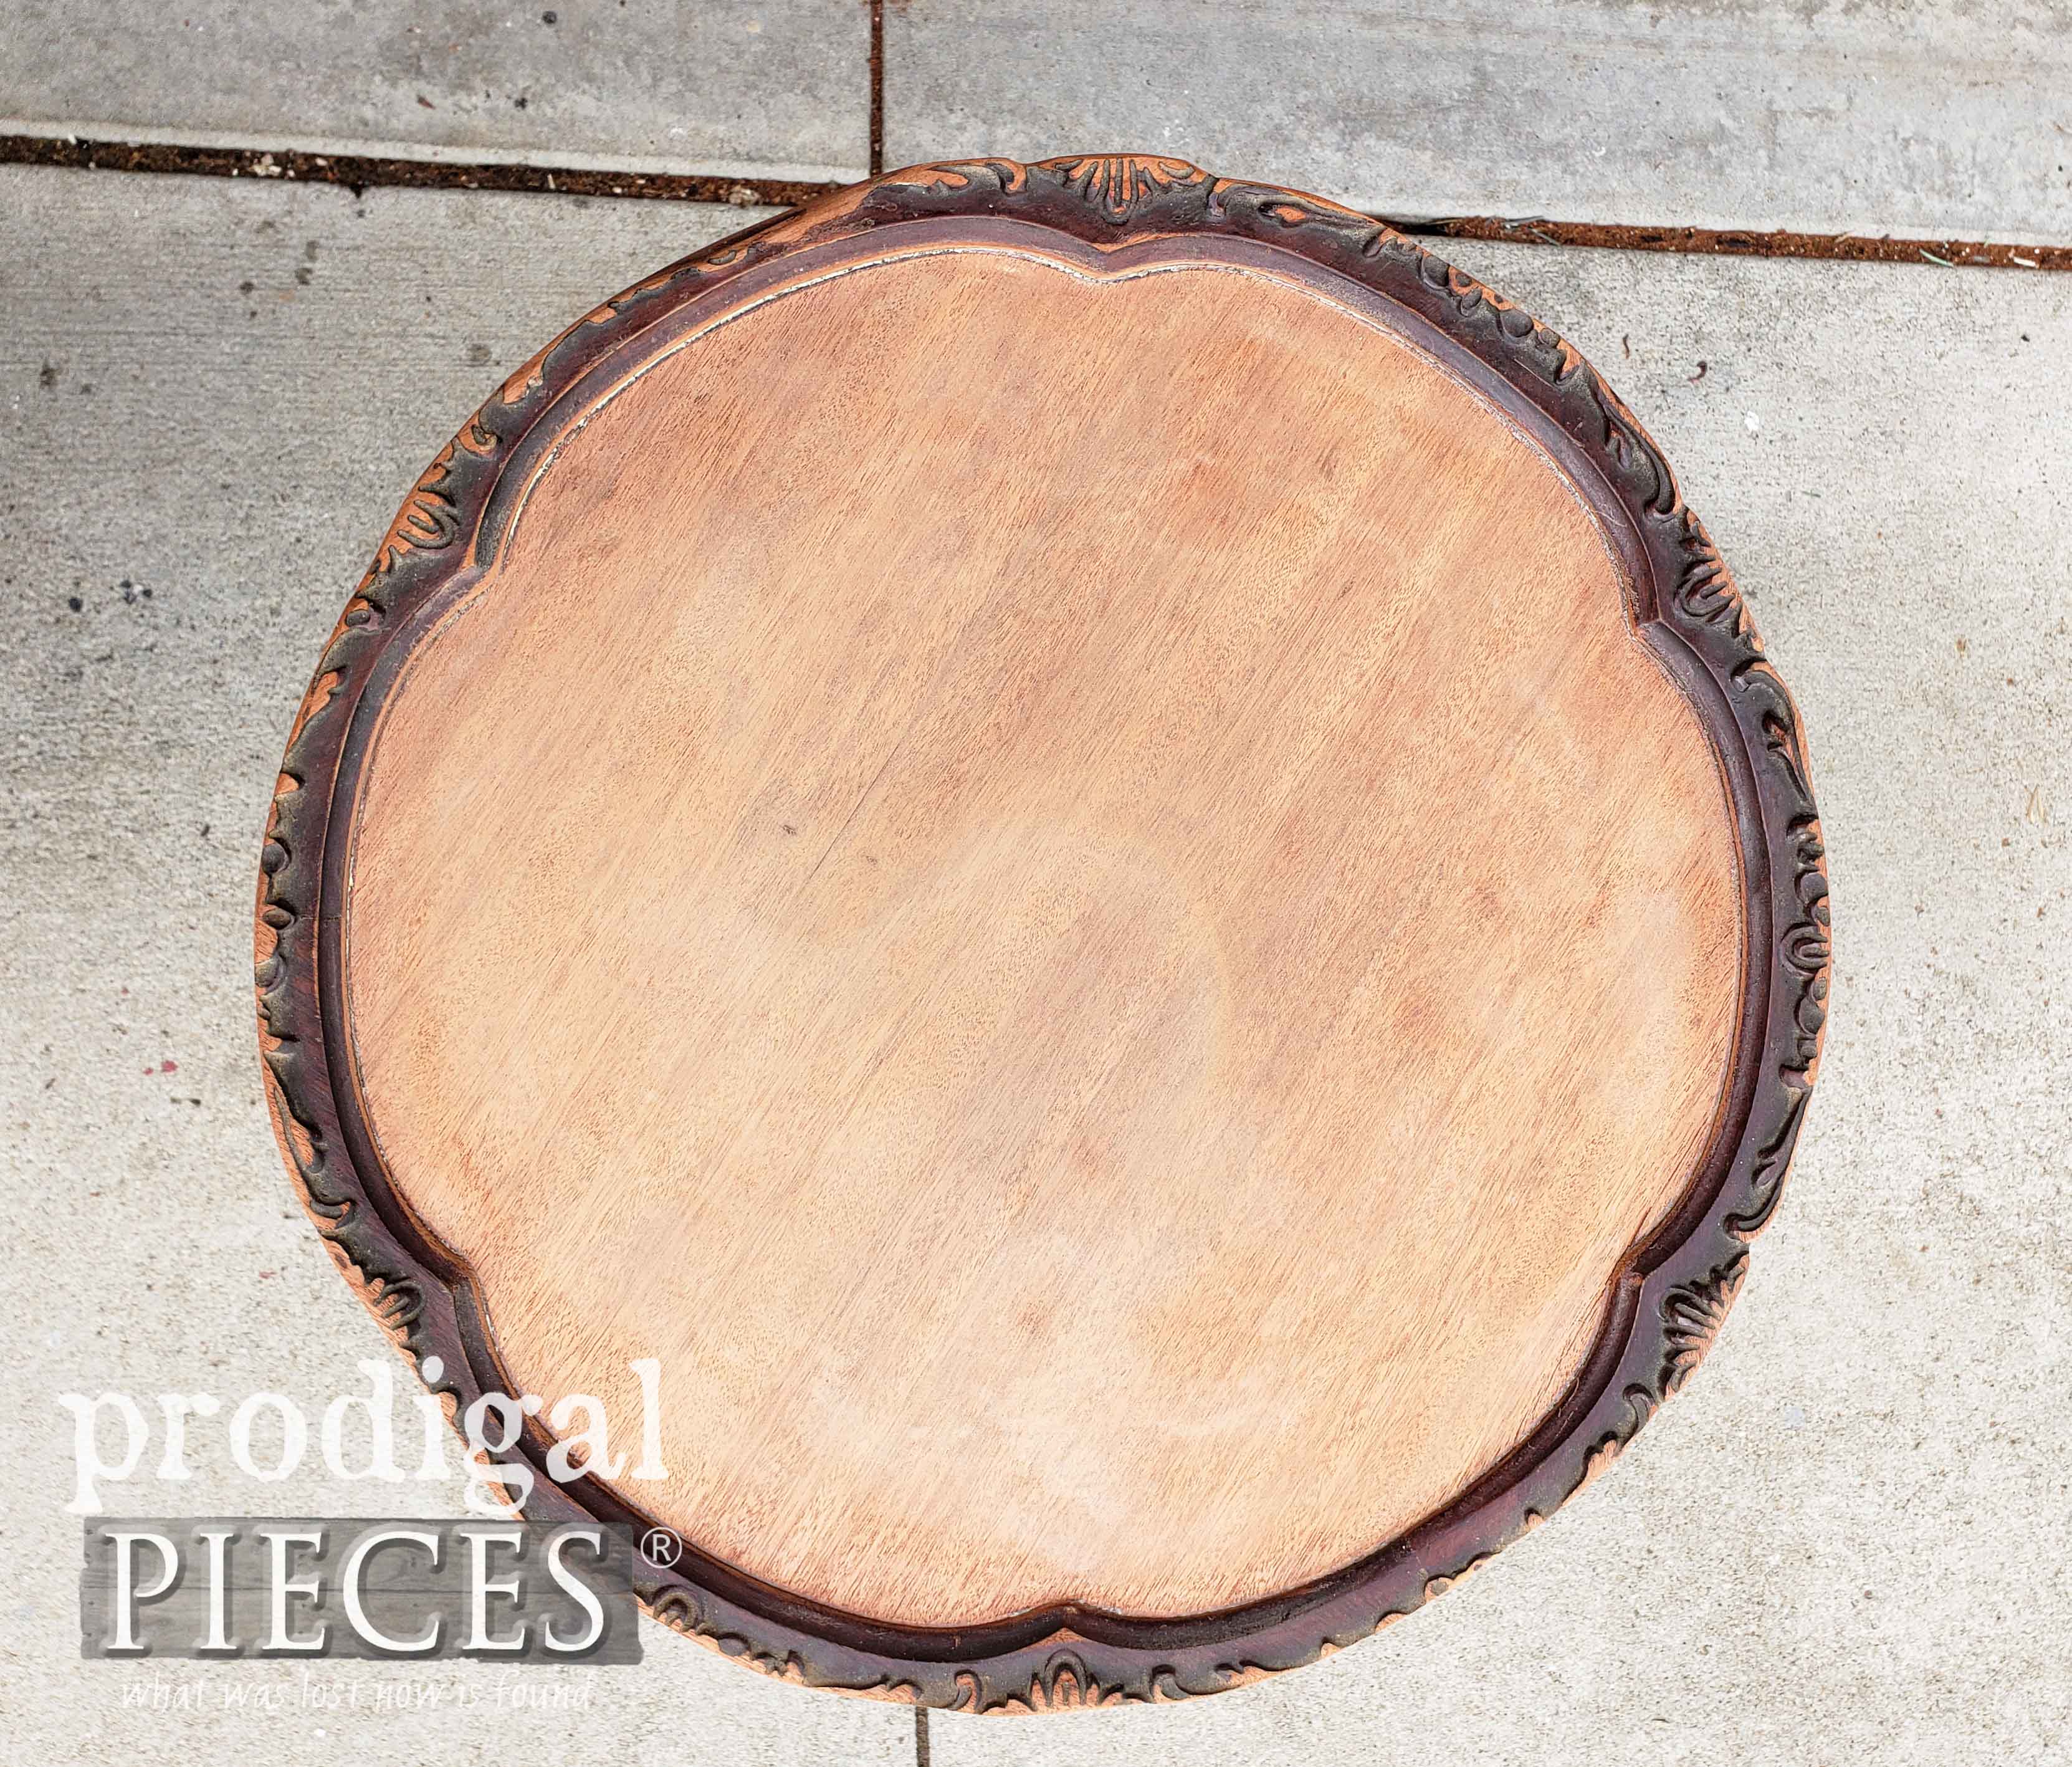 Sanded Mahogany Antique Pie Crust Table Top | prodigalpieces.com